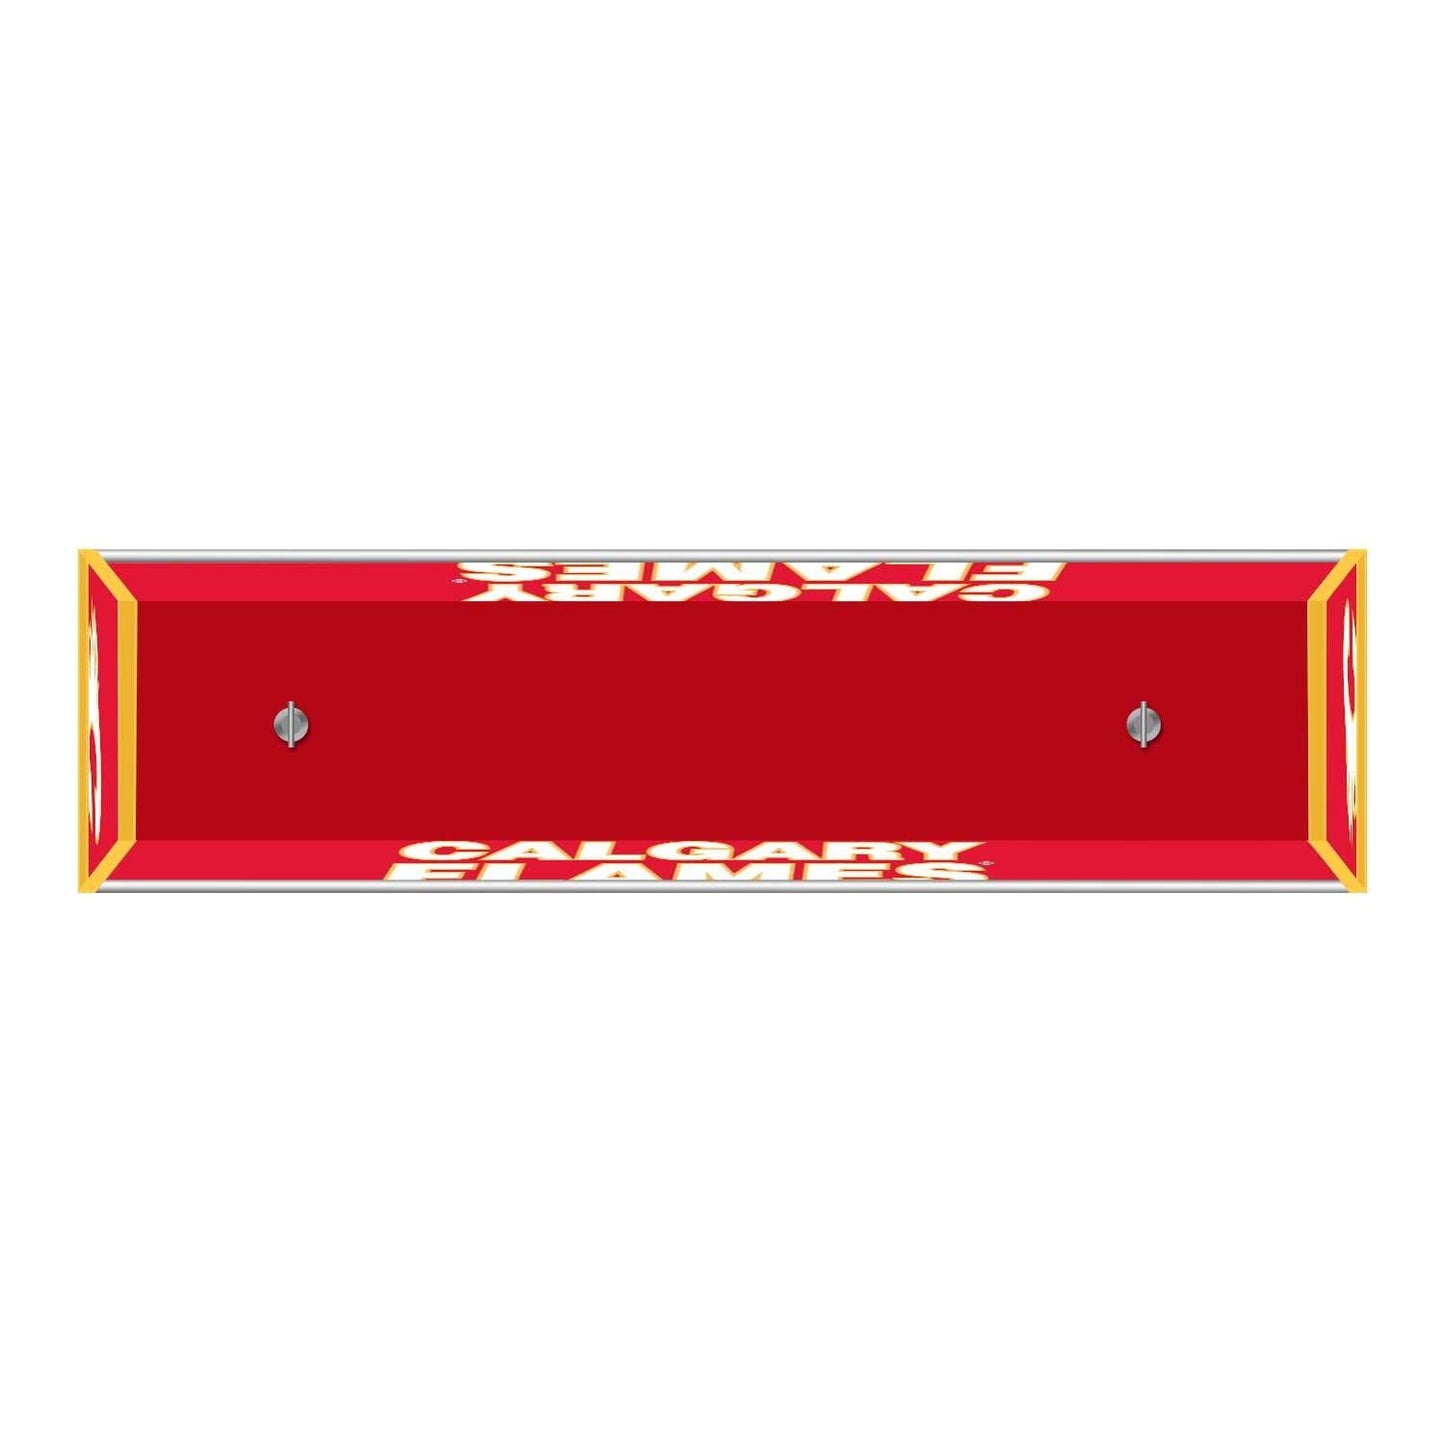 Calgary Flames: Standard Pool Table Light - The Fan-Brand